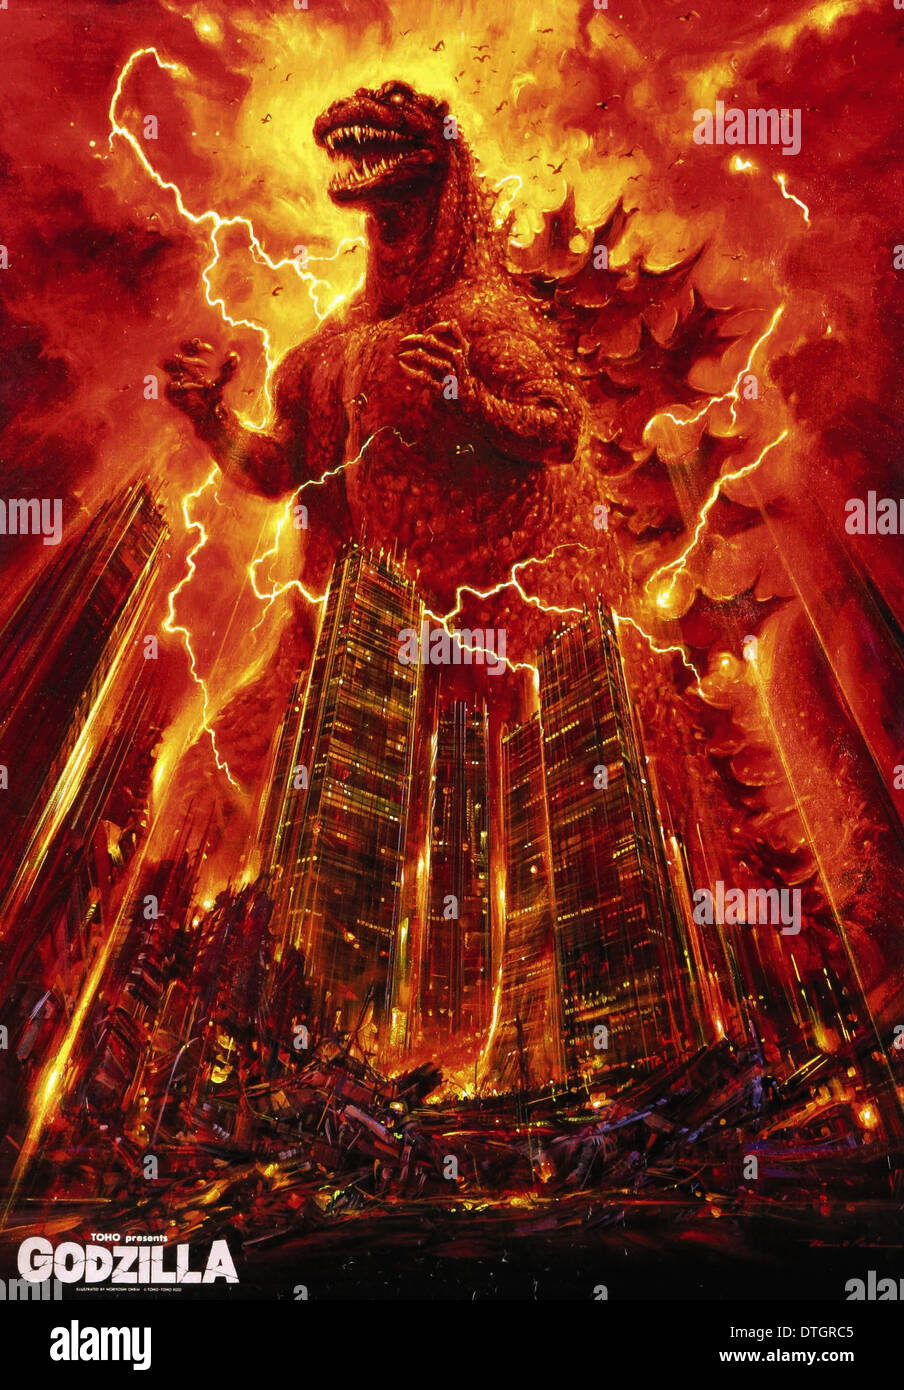 Godzilla-Film-poster Stockfoto